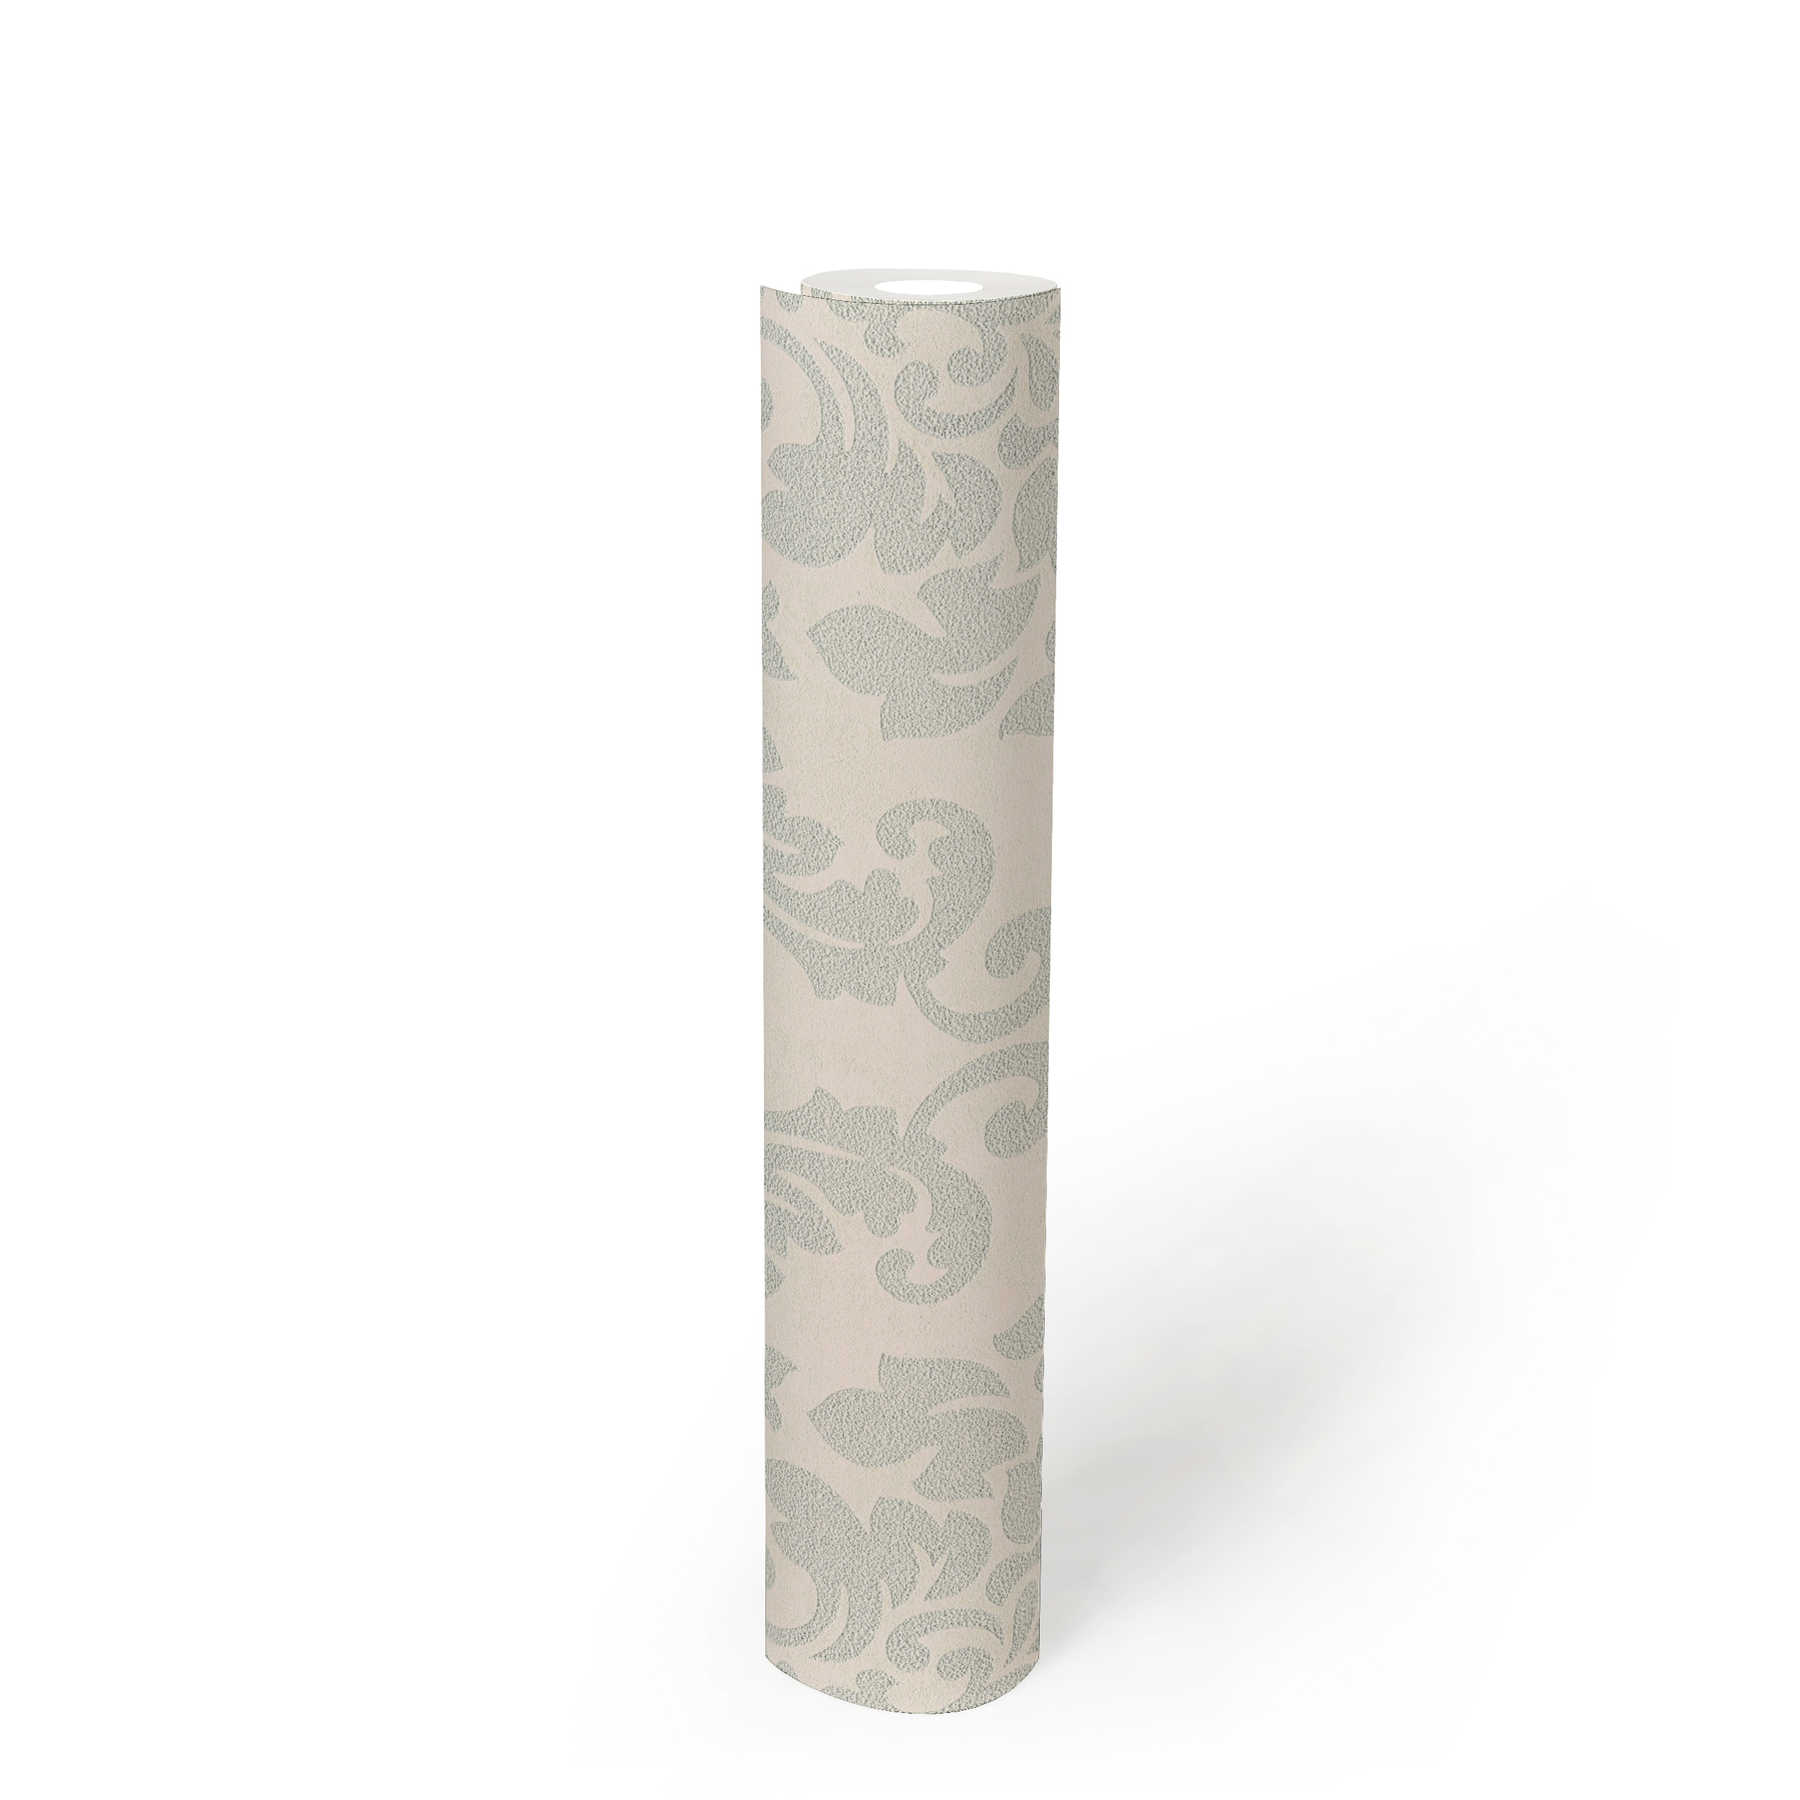             Florale Ornamenttapete mit Metallic-Effekt – Grau, Silber, Weiß
        